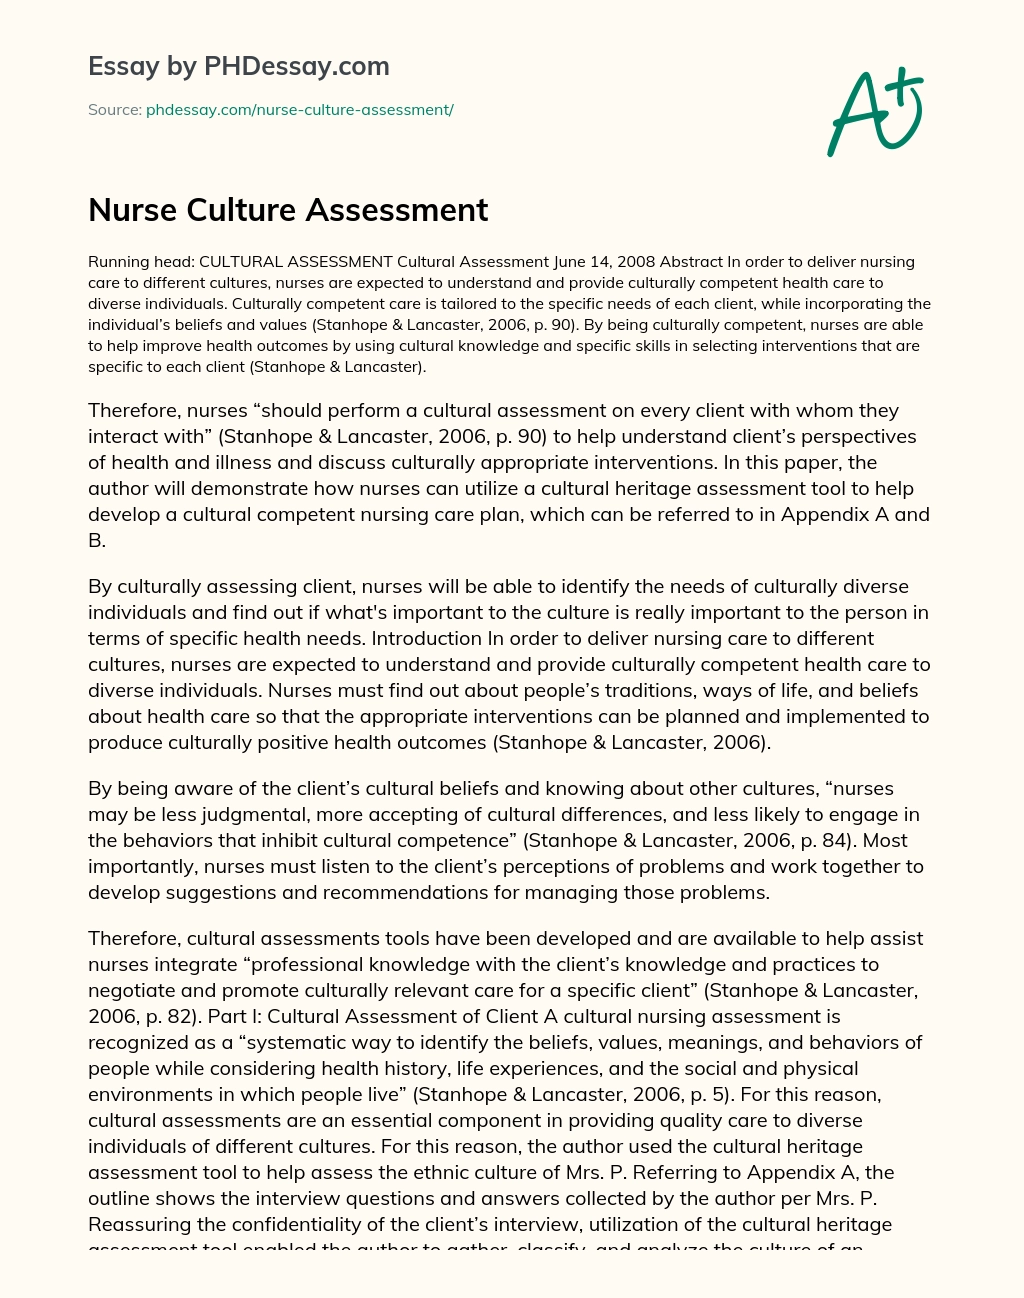 Nurse Culture Assessment essay